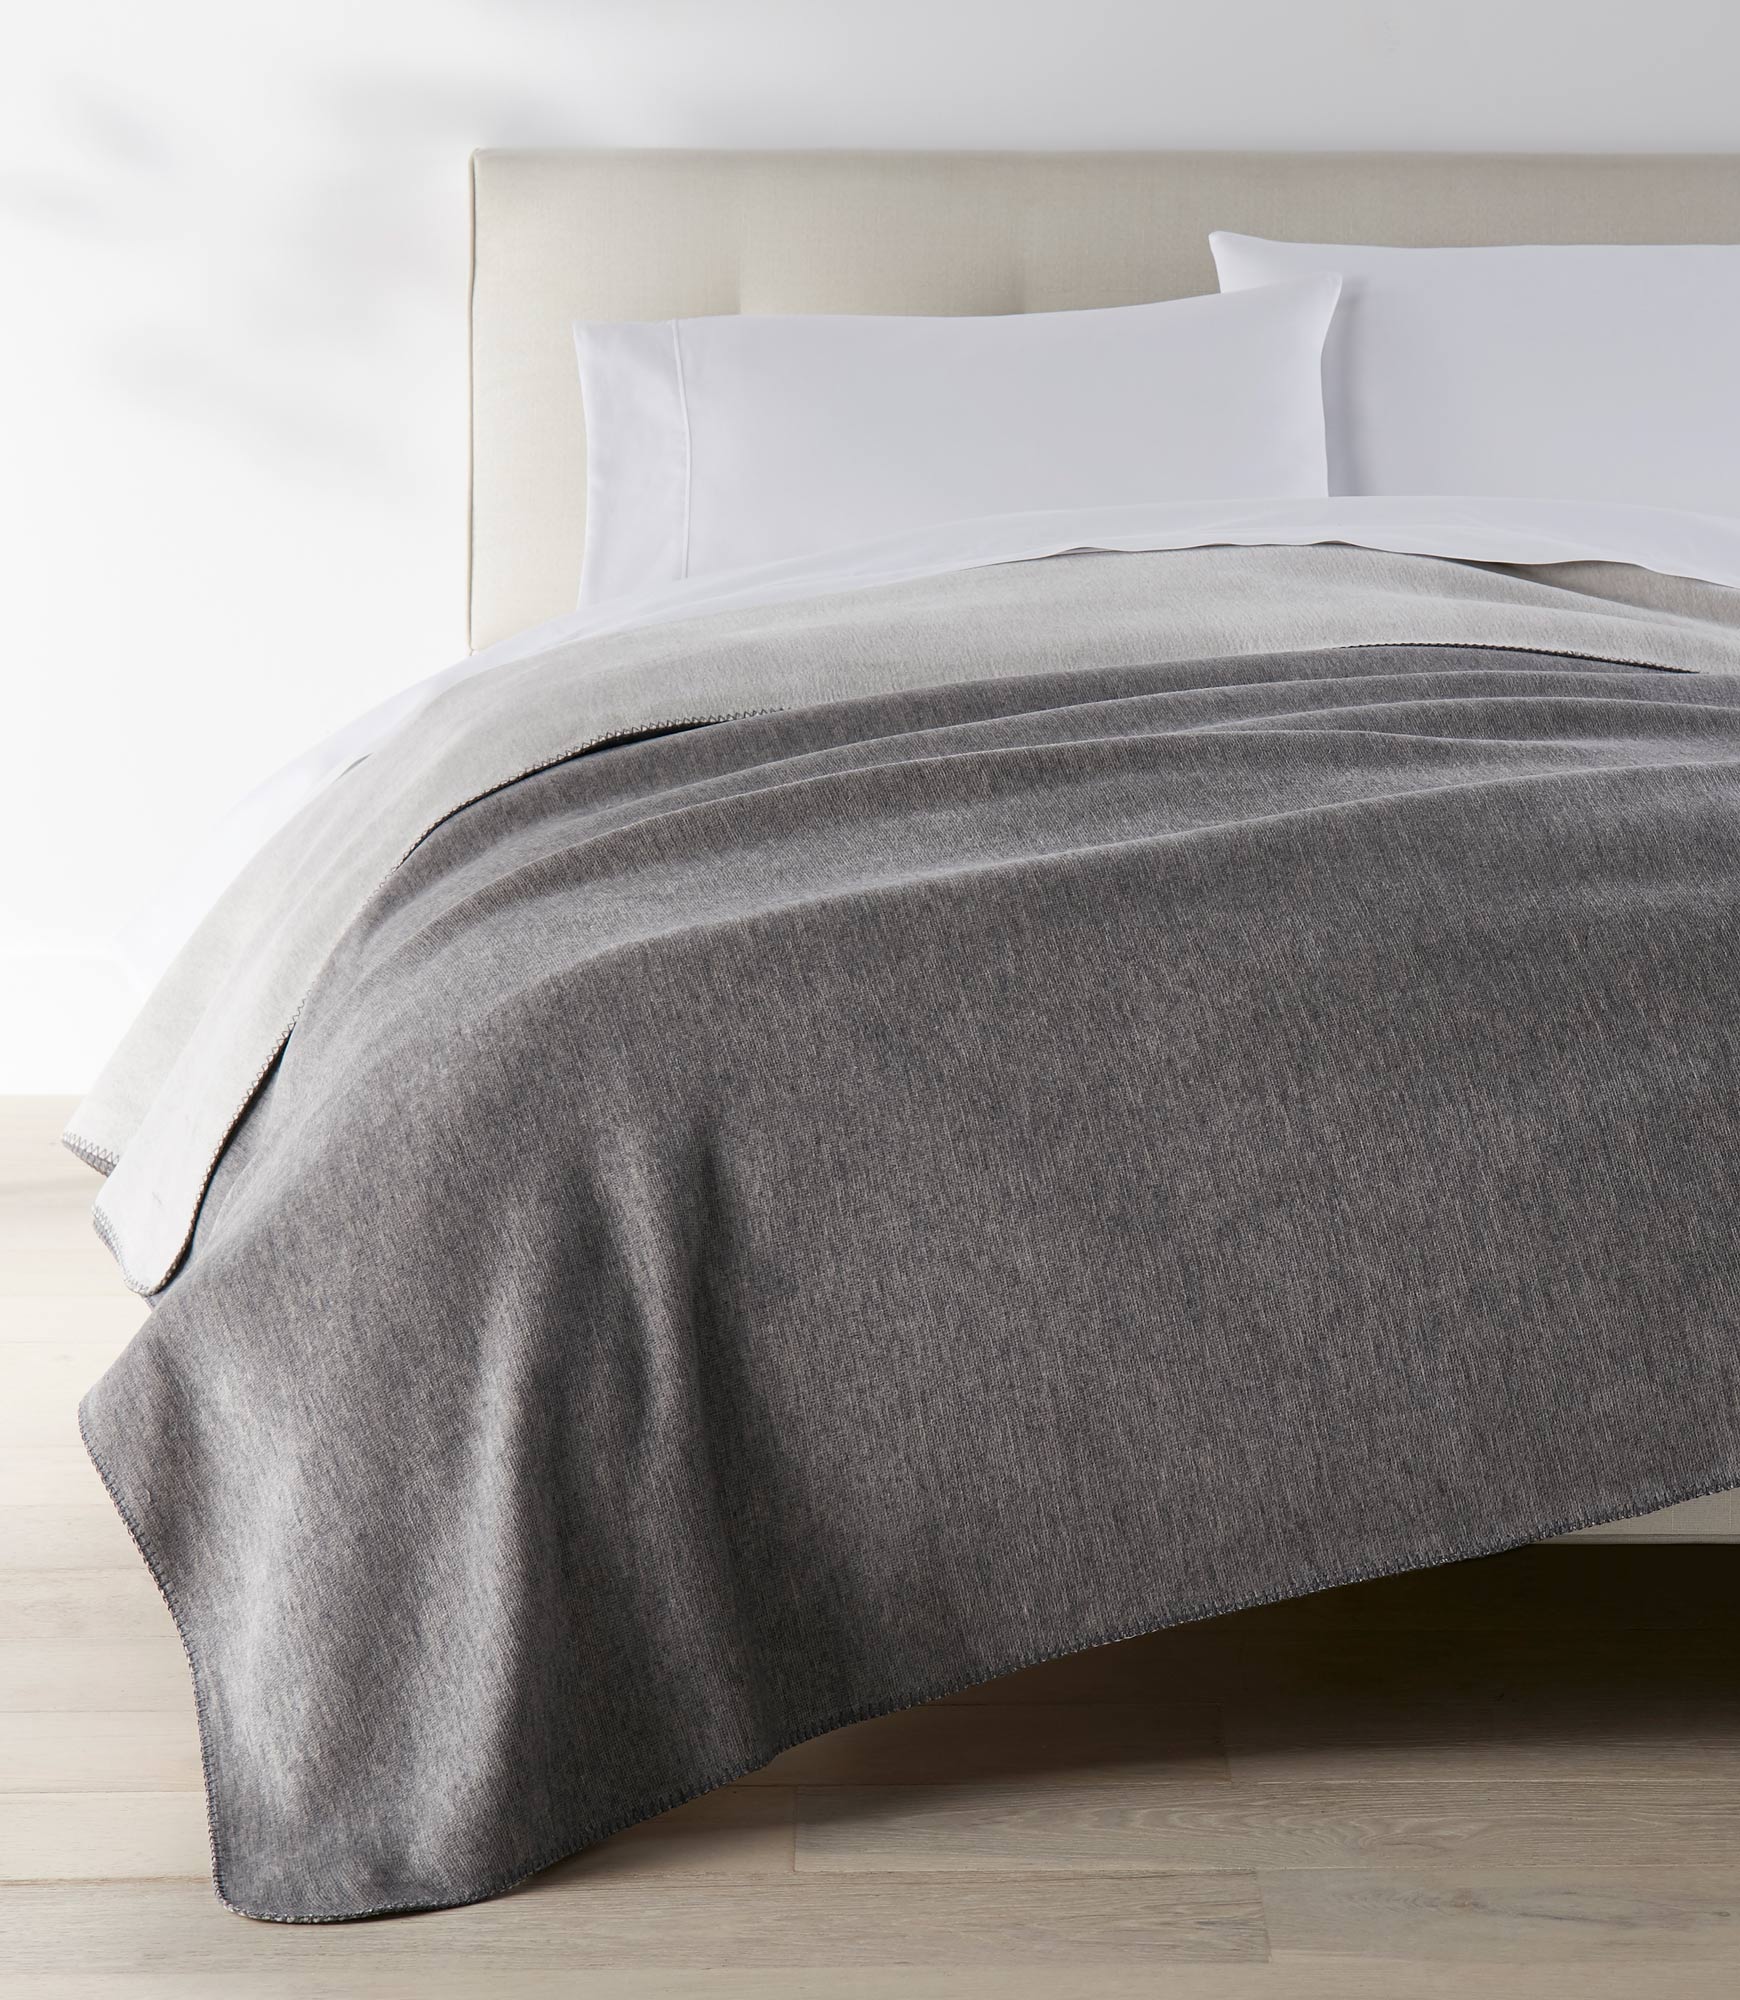 Alta Reversible Cotton Blanket Gray on White Bed